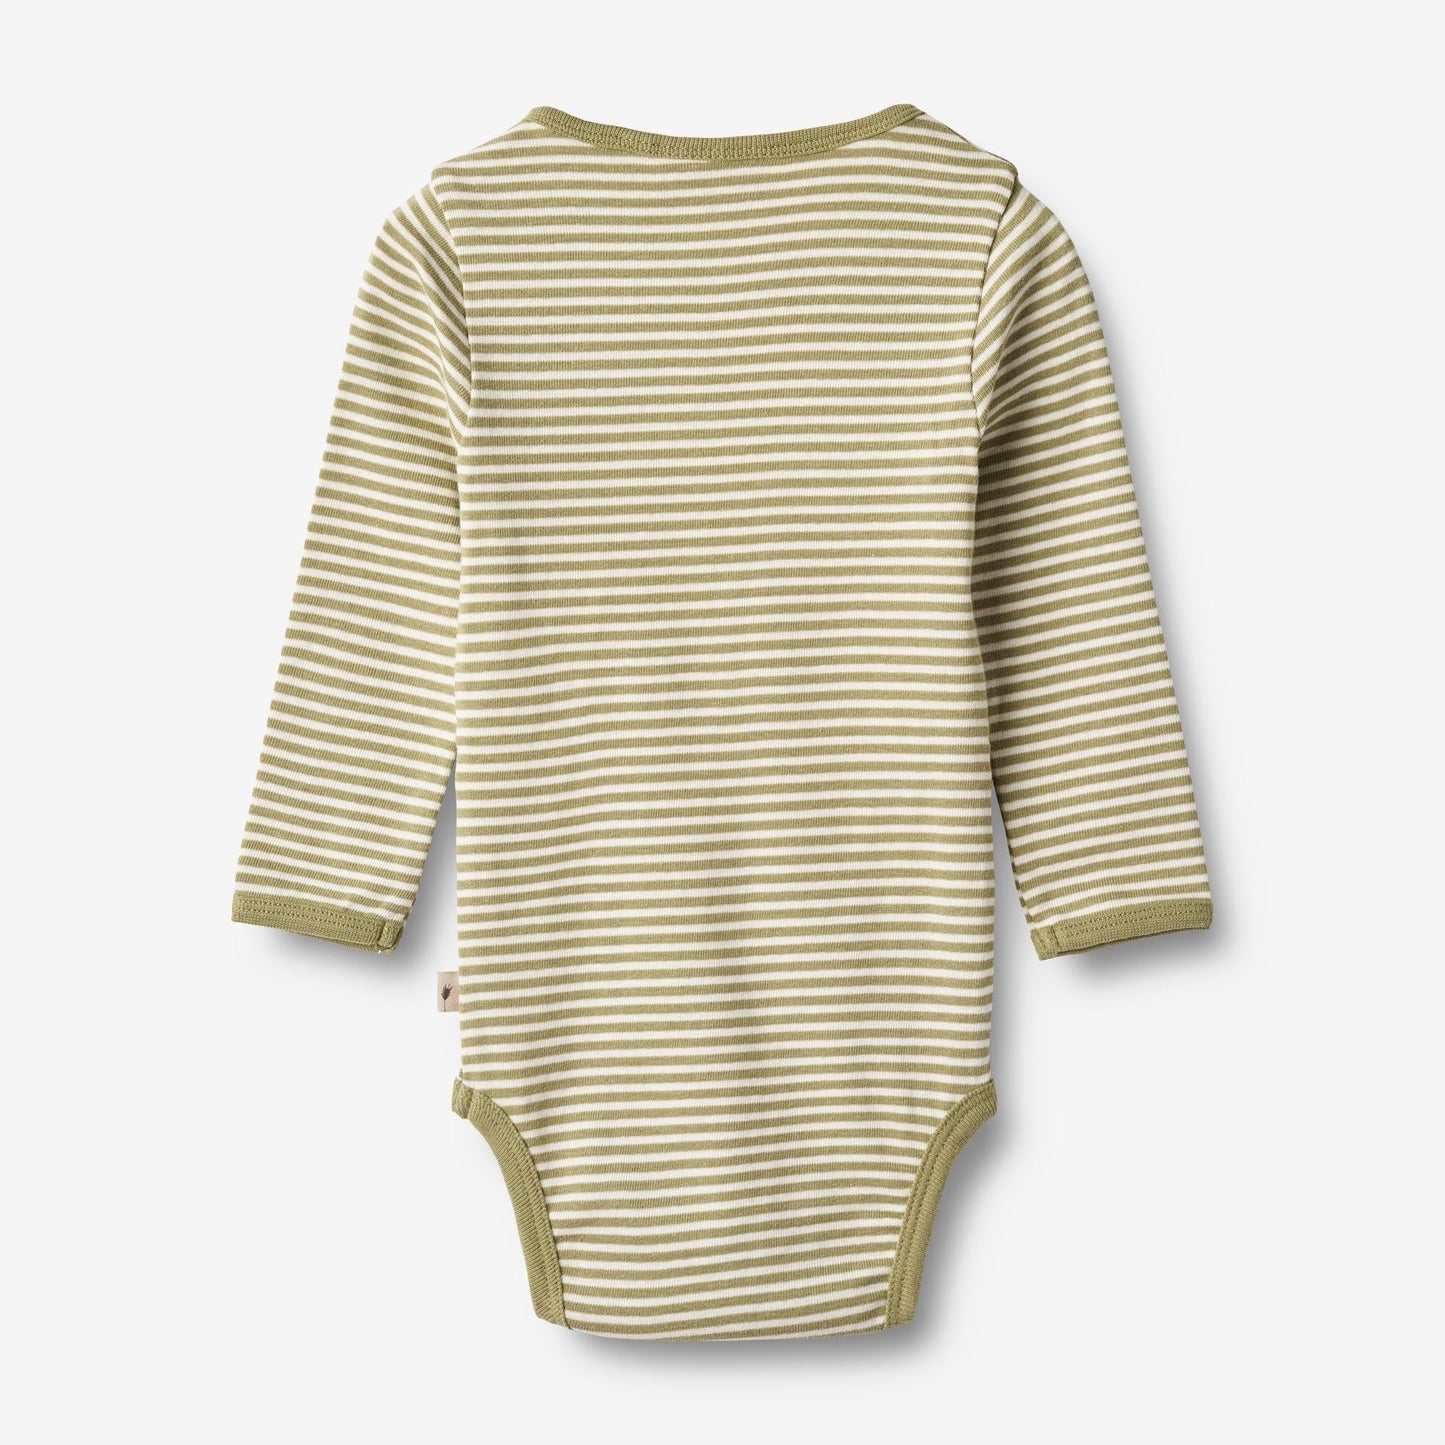 Wheat 'Benny' L/S Baby Body - Sage Green Stripe